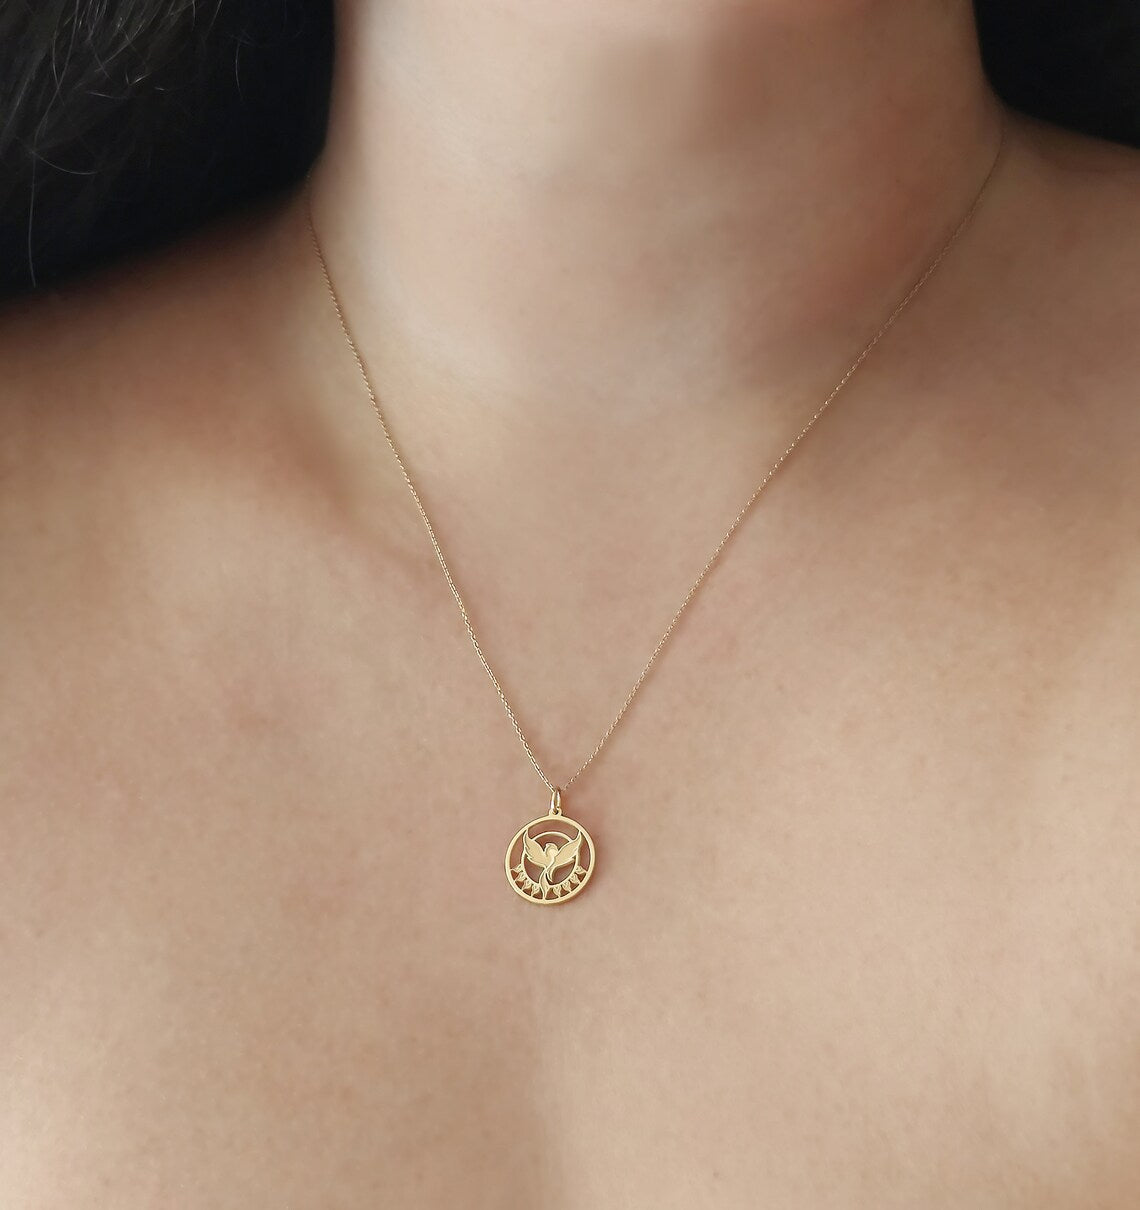 Rising Phoenix Charm Necklace For Women - 14k Gold Vermeil FireBird Statement Necklace